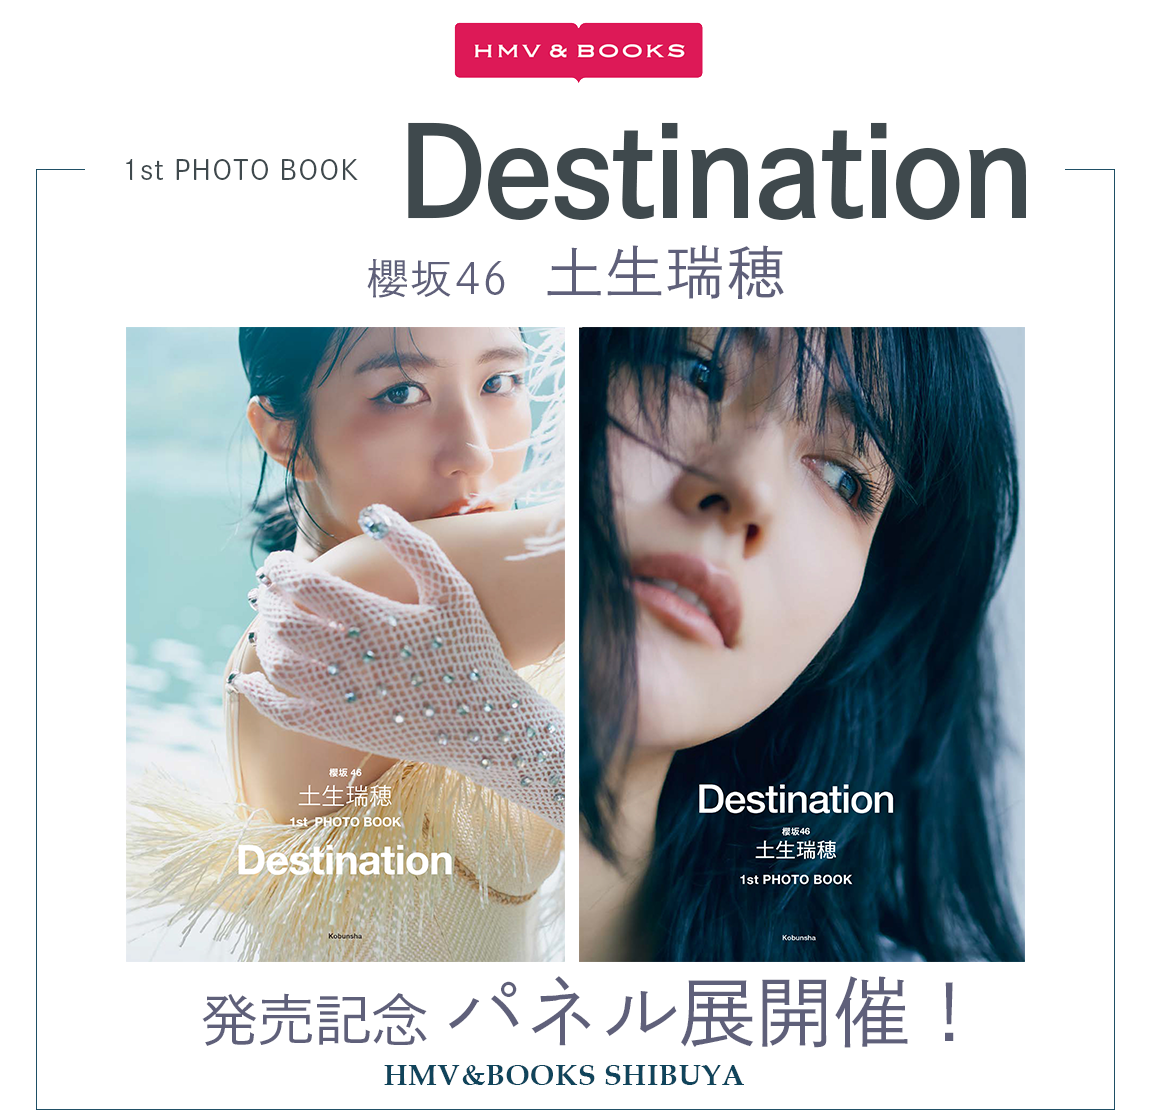 櫻坂46 土生瑞穂1st PHOTO BOOK「Destination」』発売記念パネル展開催！|